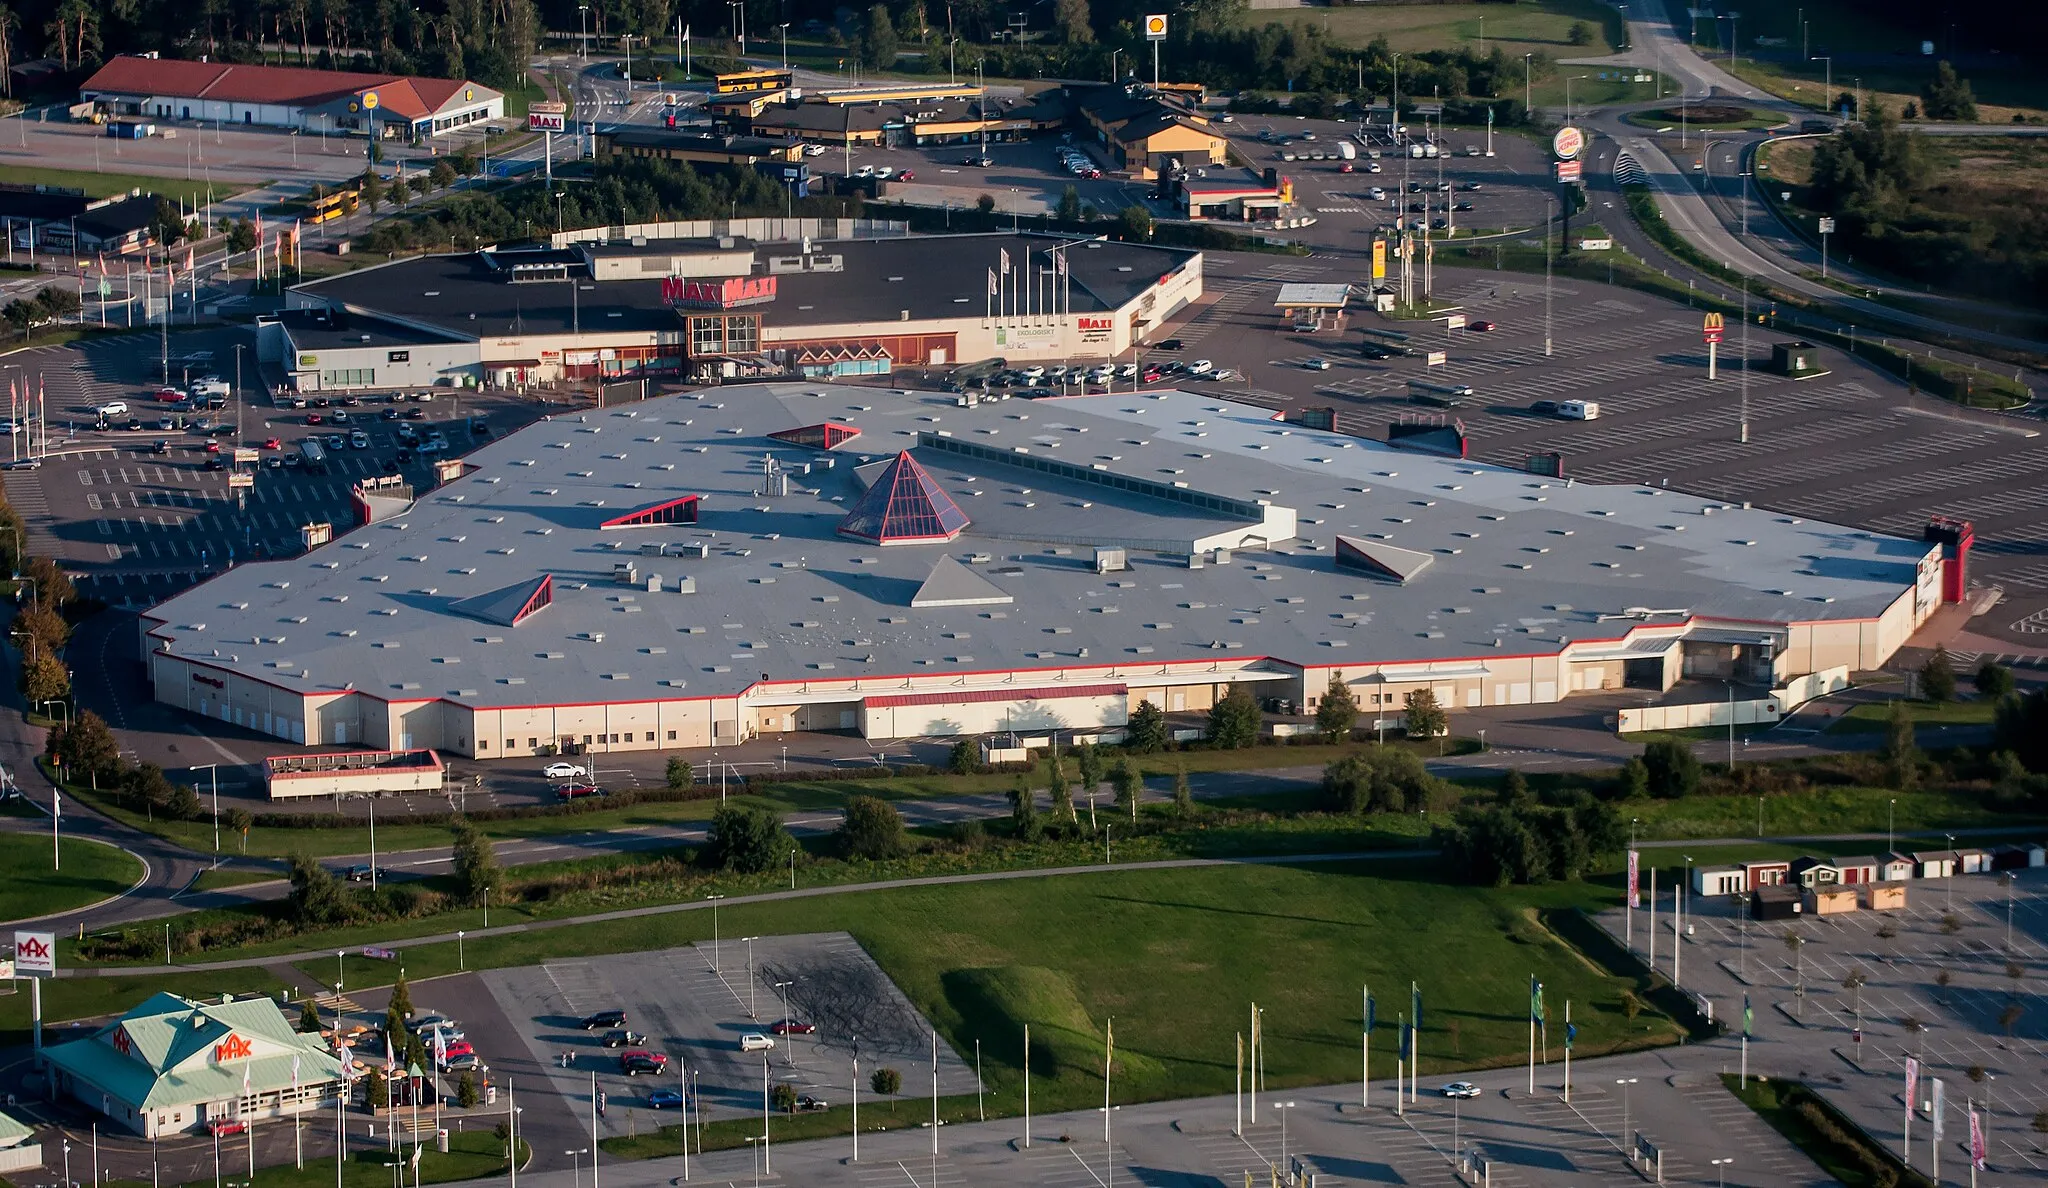 Photo showing: Shopping mall "Center Syd" in Löddeköpinge, Sweden